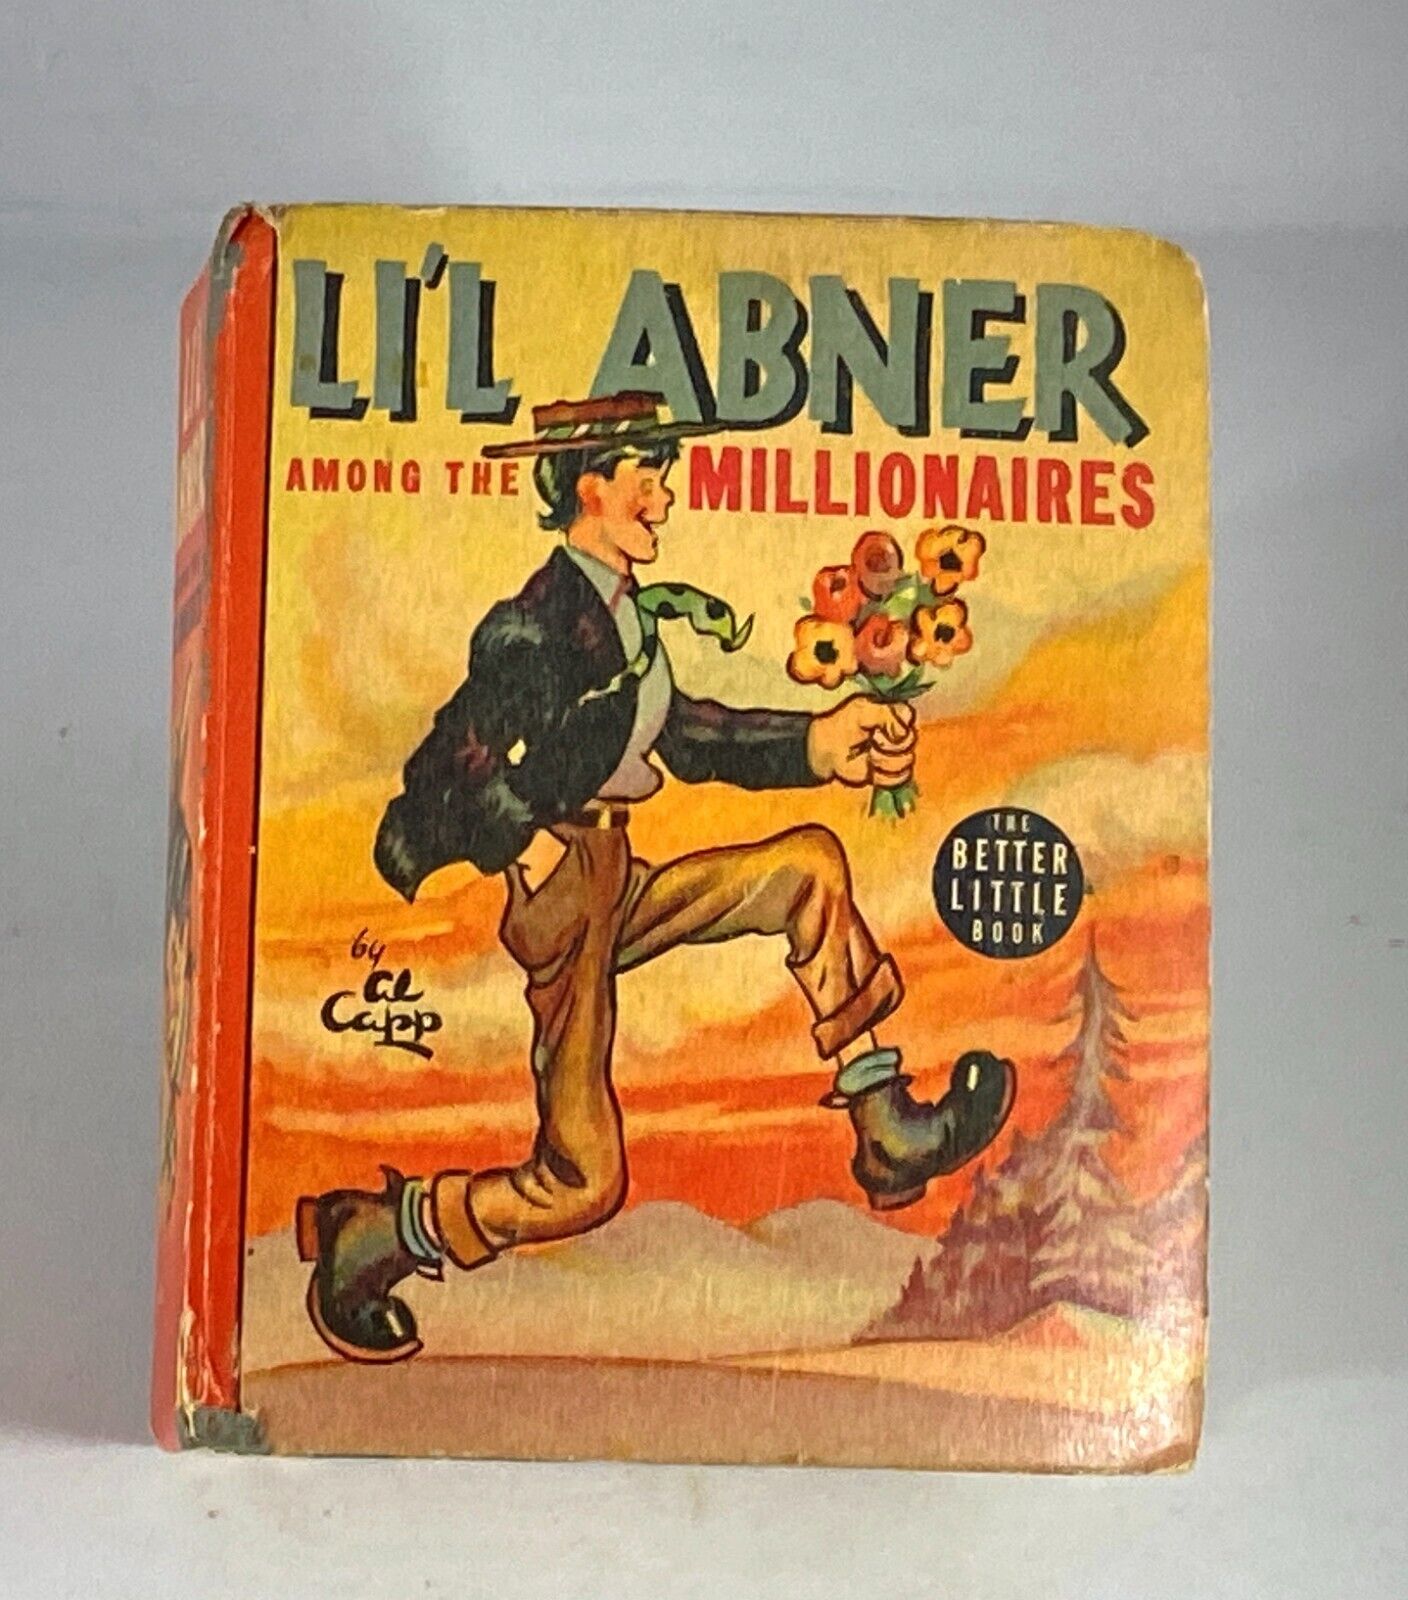 1939 Big Little Book Li'l Abner Among the Millionaires, Whitman - #1401